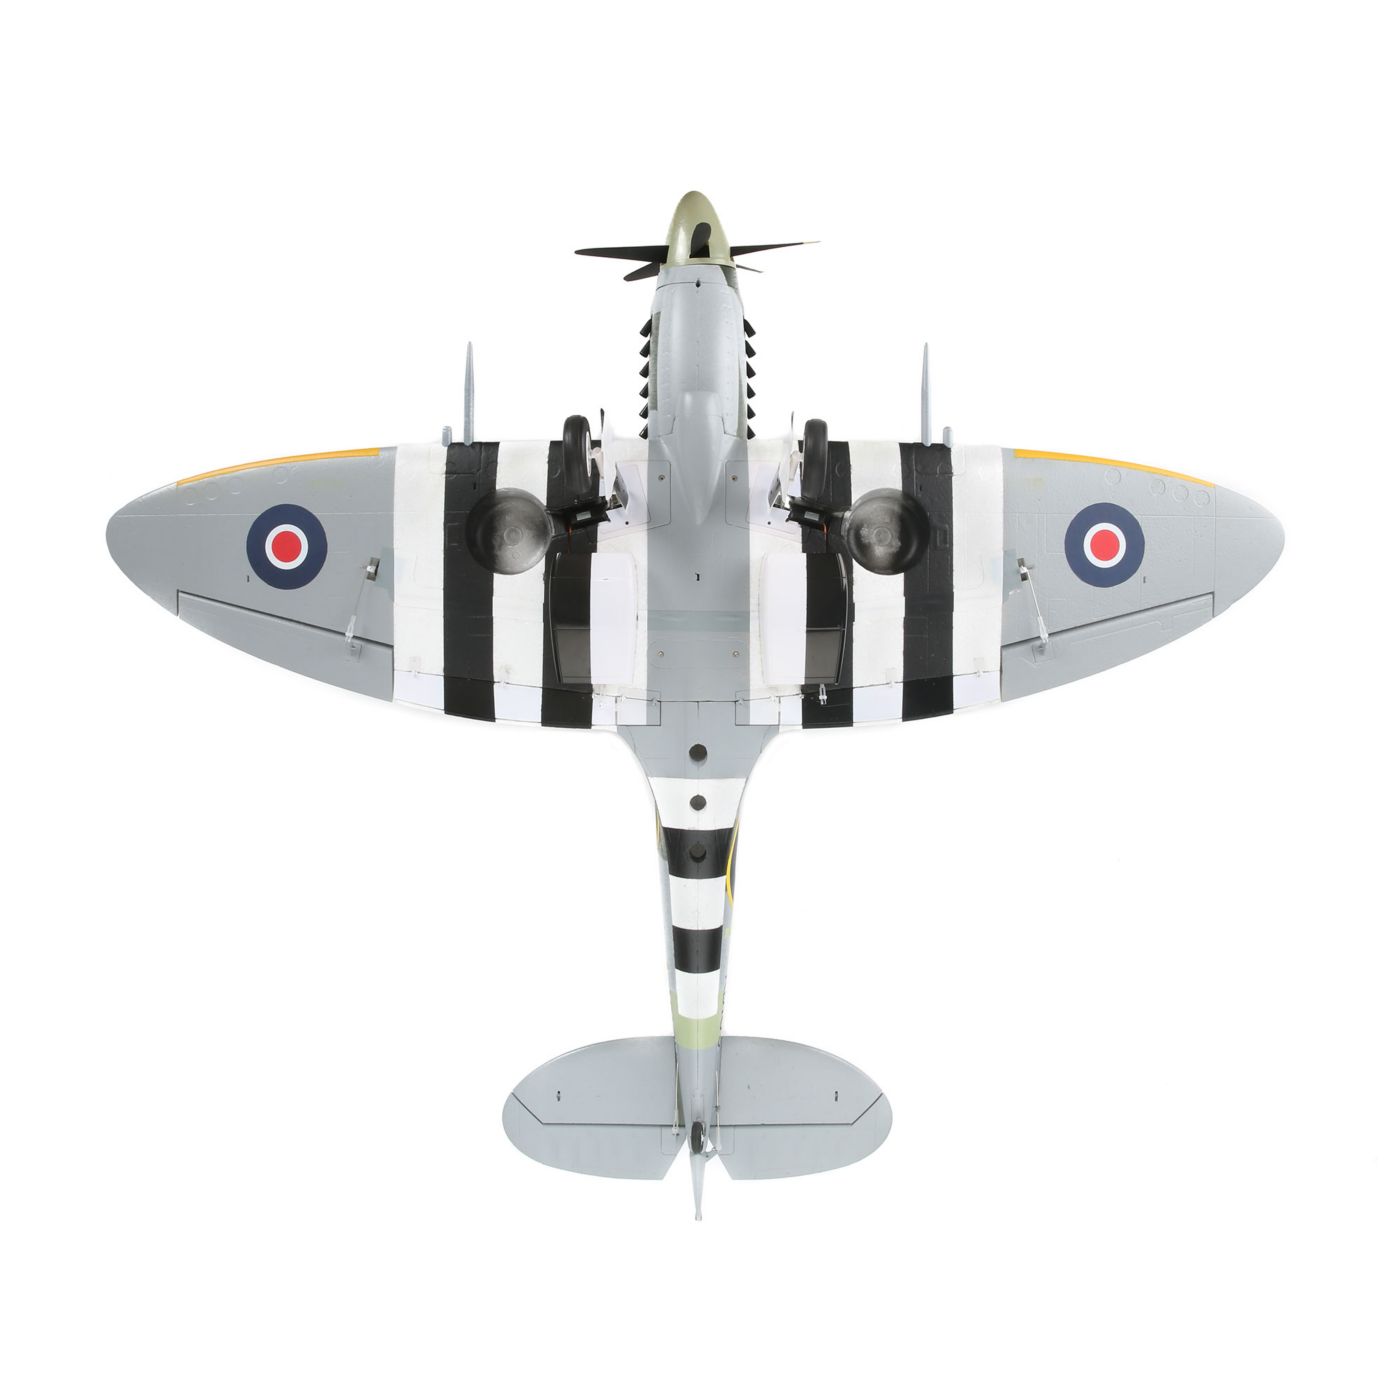 New Eflite E-flite RC British Spitfire MK XIV 1.2m BNF Basic Warbird EFL8650